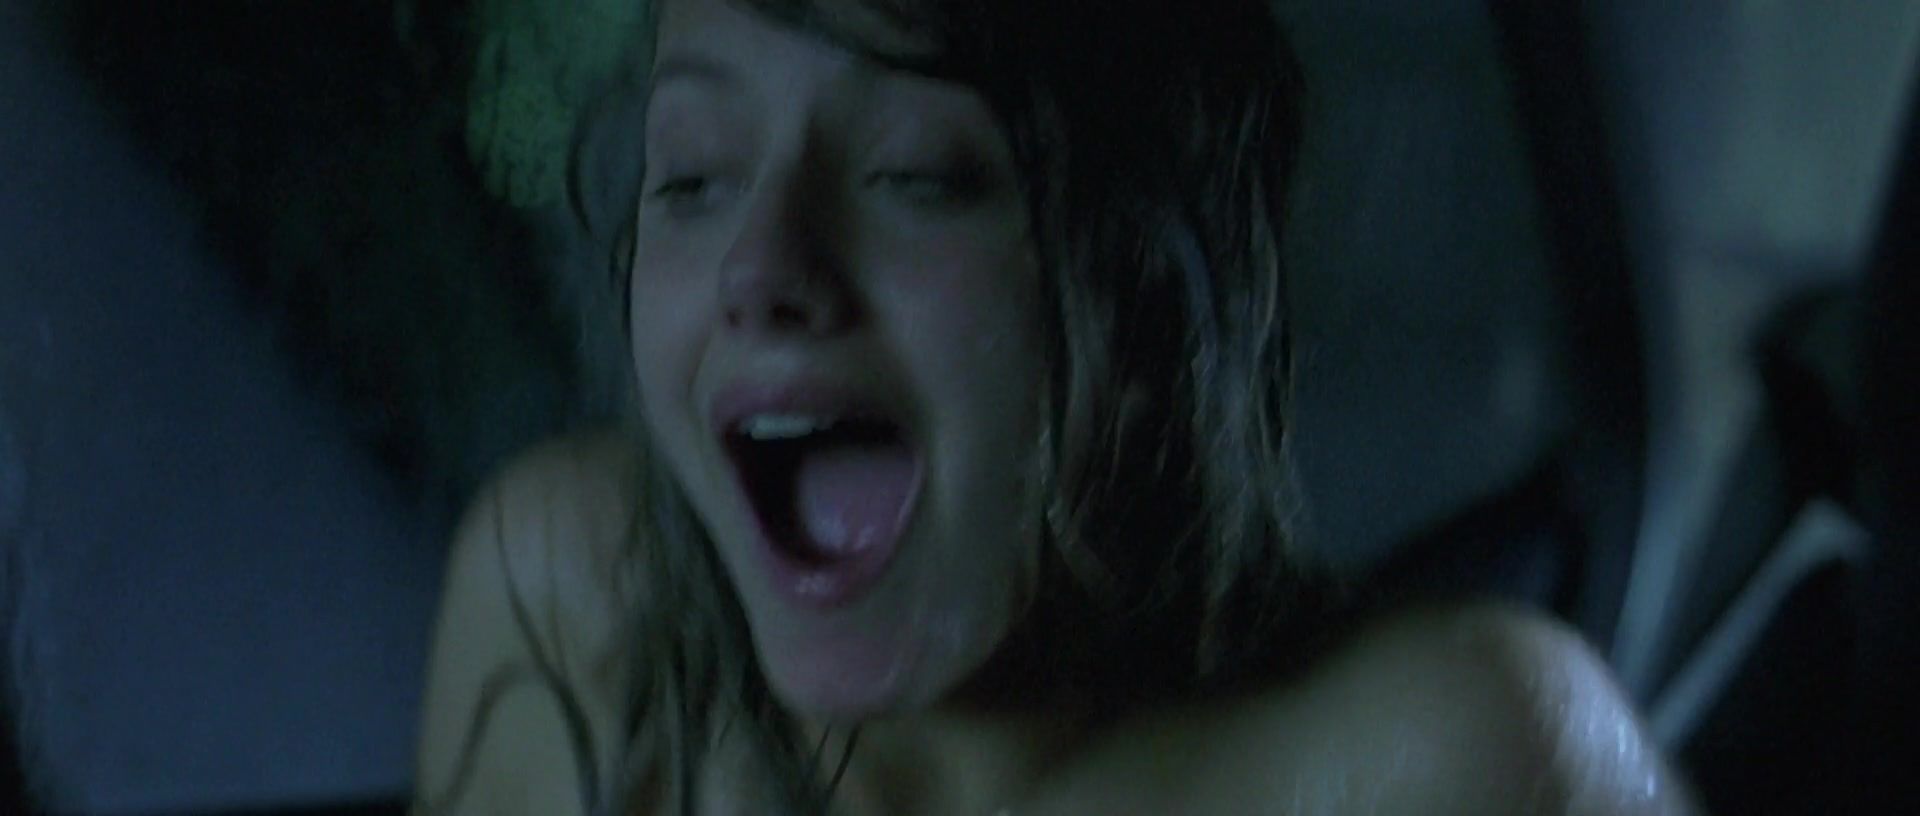 Pendeja Naked Melanie Laurent from French movie "Je vais bien, ne t'en fais pas" | Released in 2006 Fux